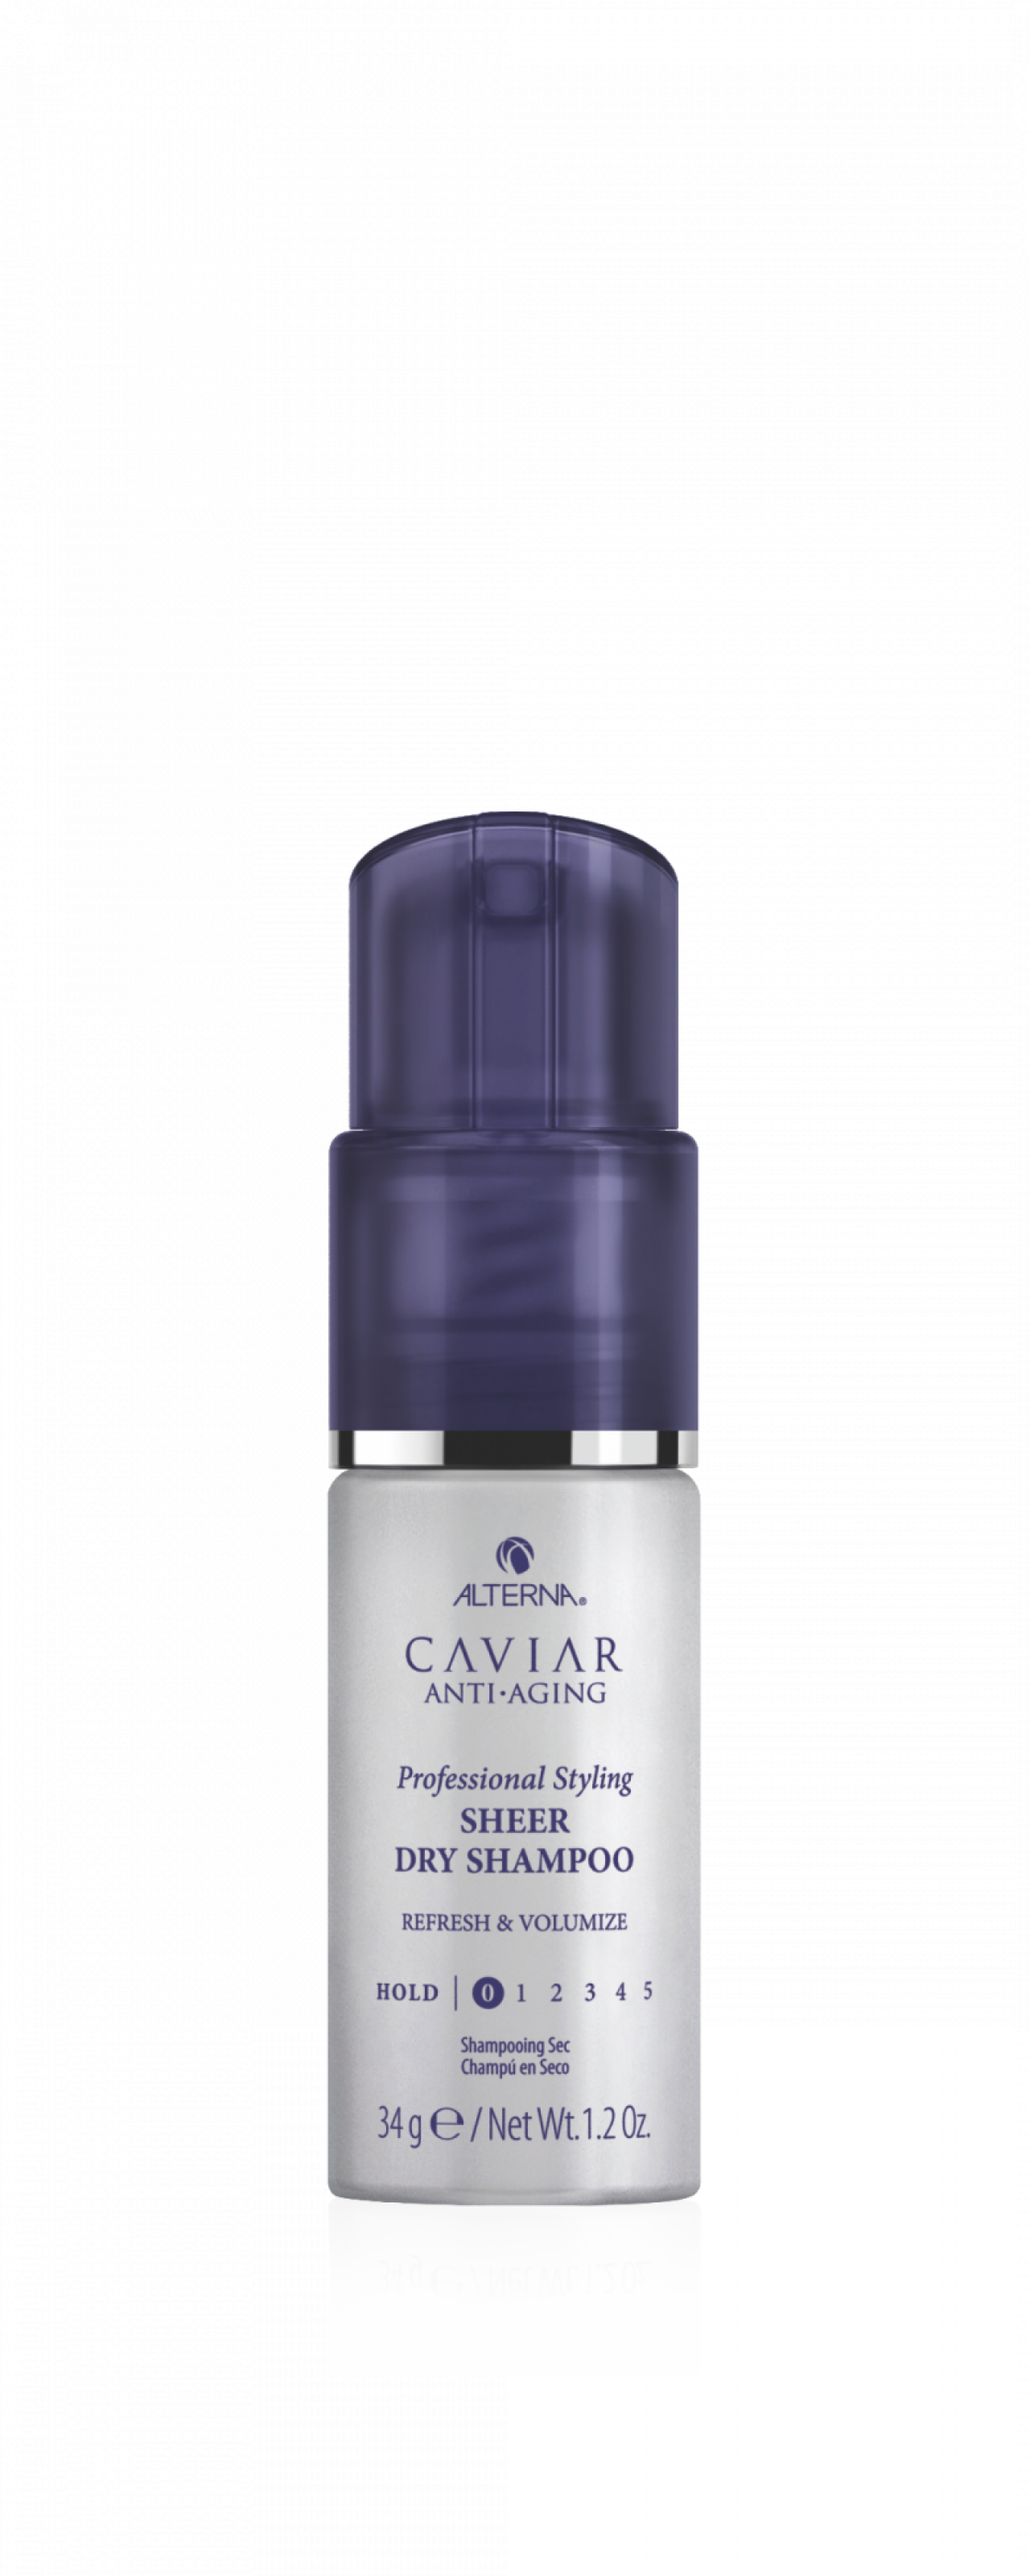 Alterna Caviar Anti-Aging STYLING Sheer Dry Shampoo – Too